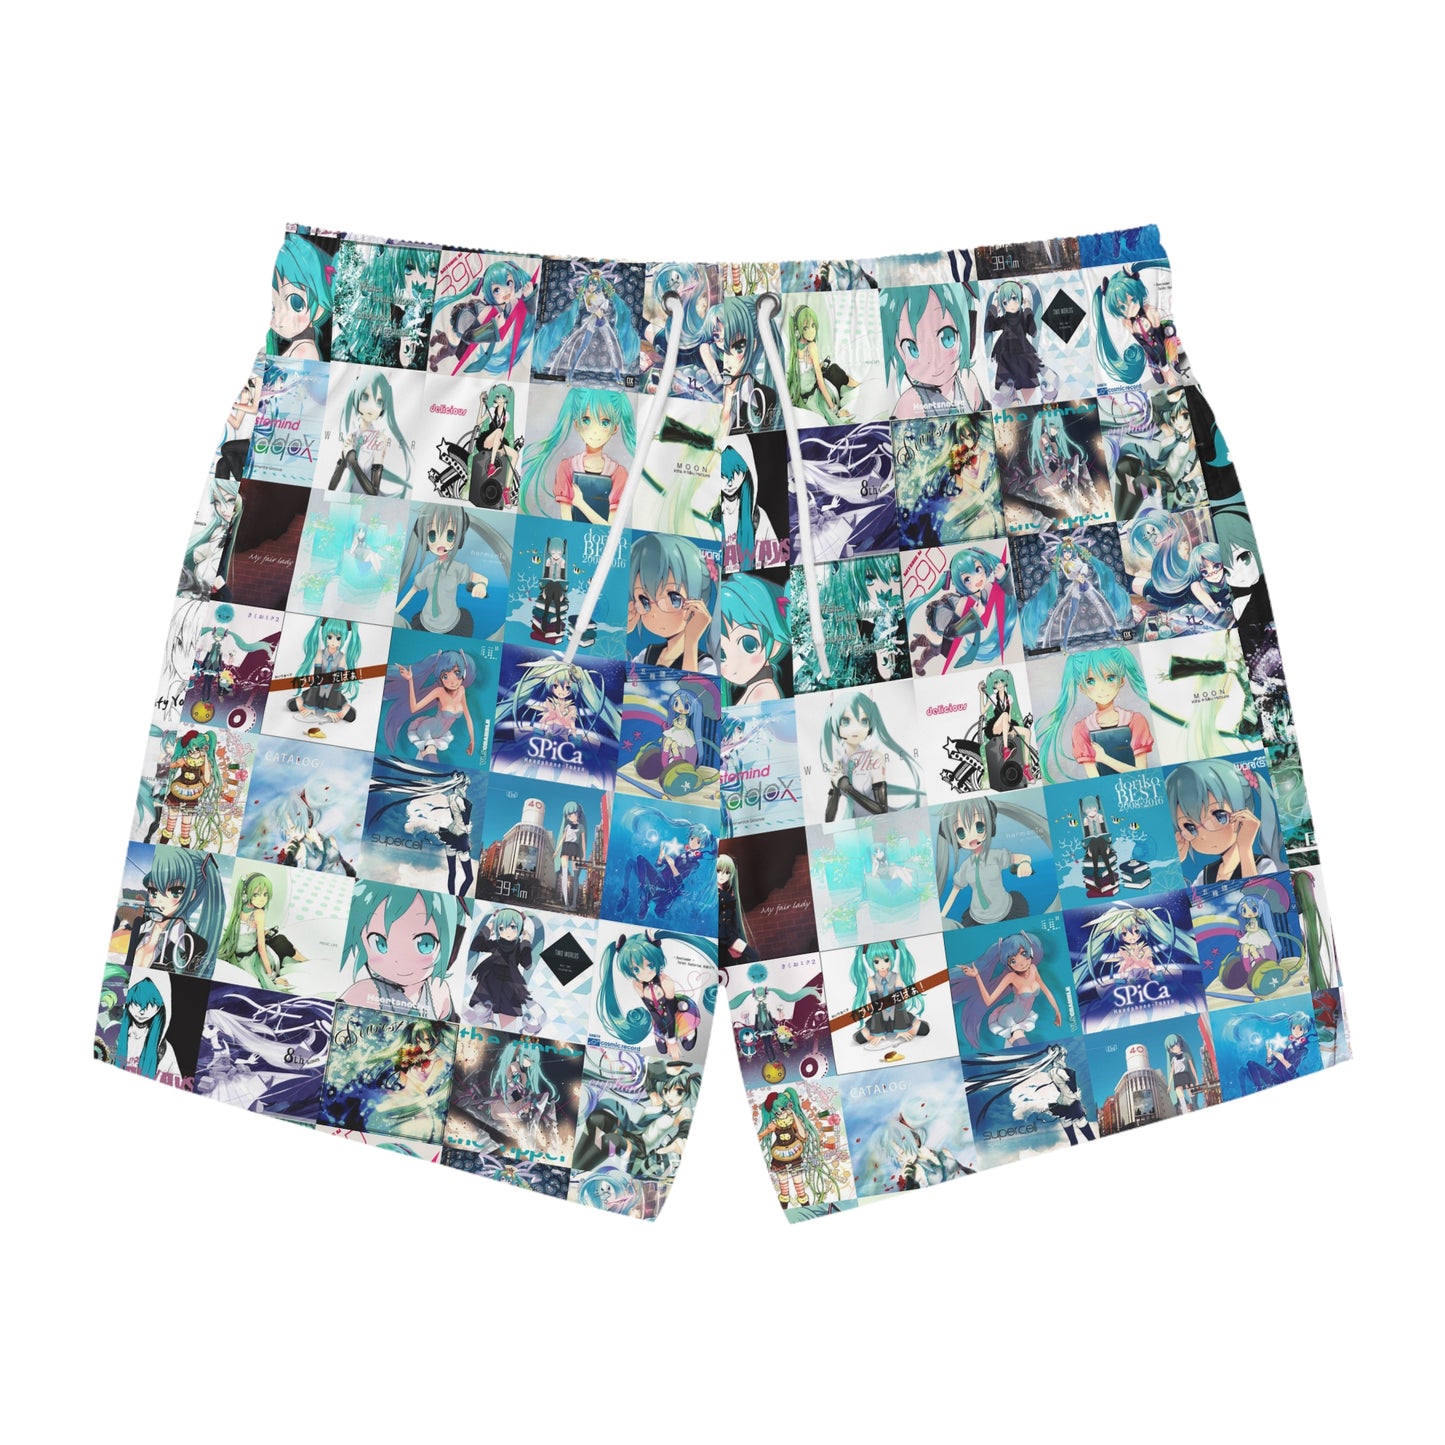 Hatsune Miku Album Cover Collage Men's Swim Trunks